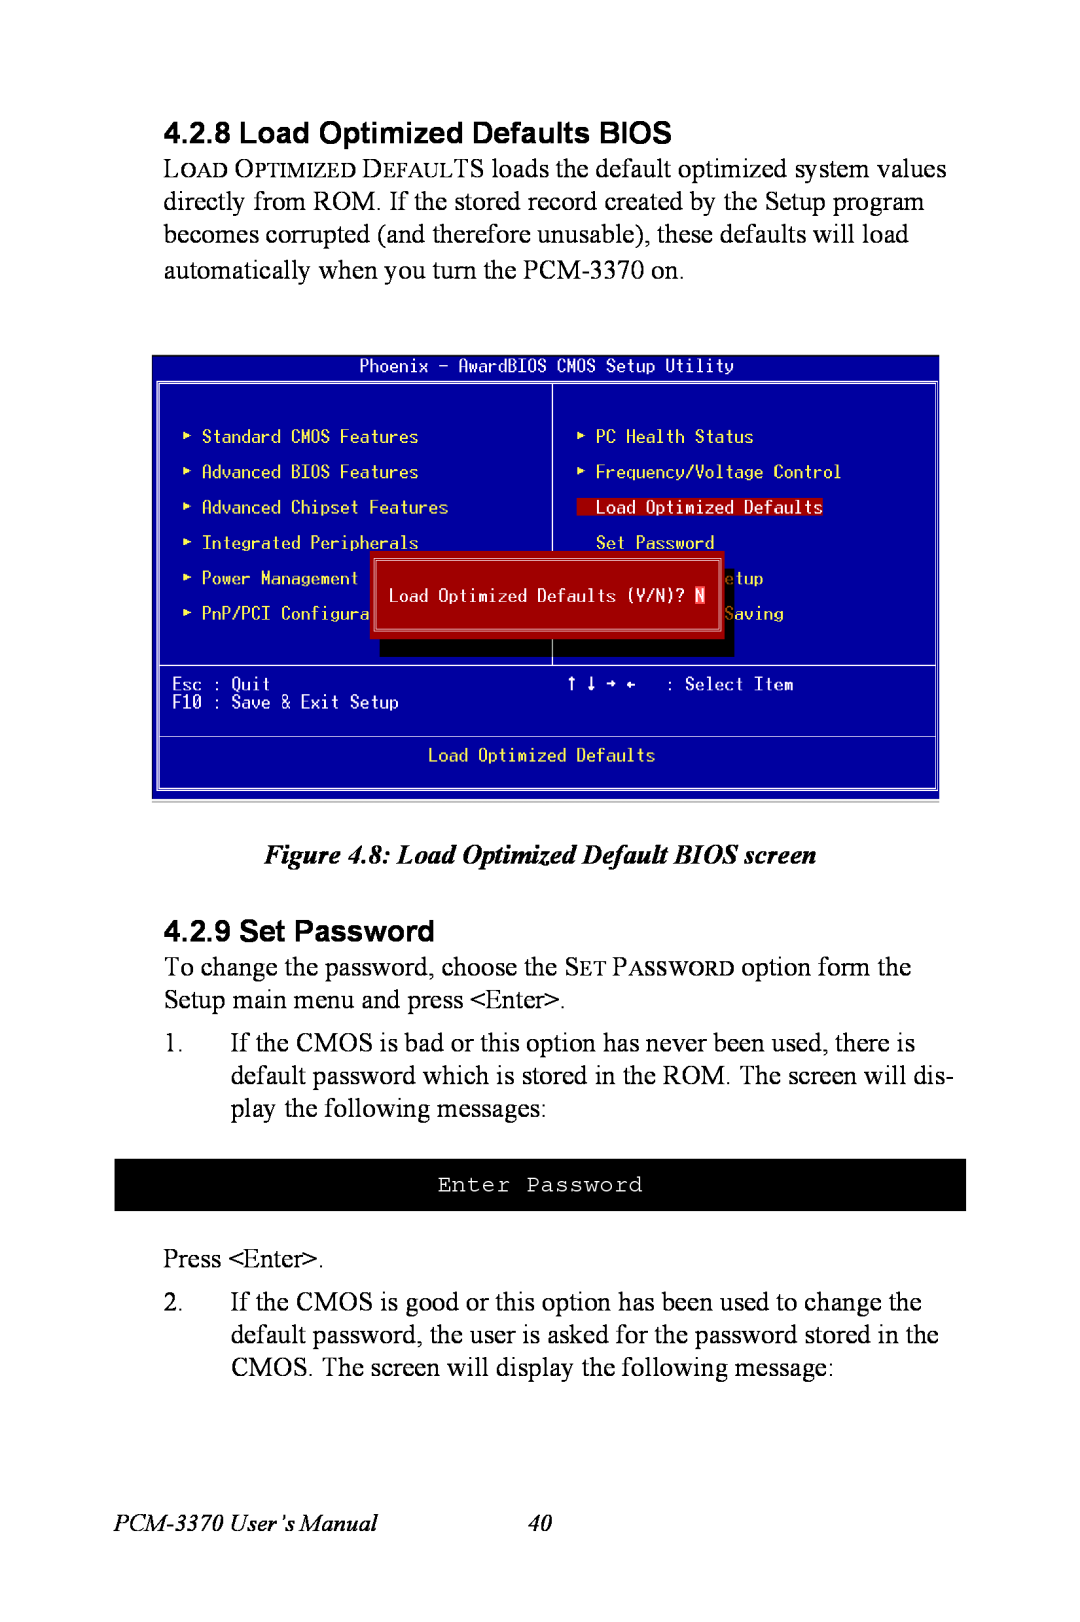 Intel PCM-3370 user manual Load Optimized Defaults BIOS, Set Password, 8 Load Optimized Default BIOS screen 